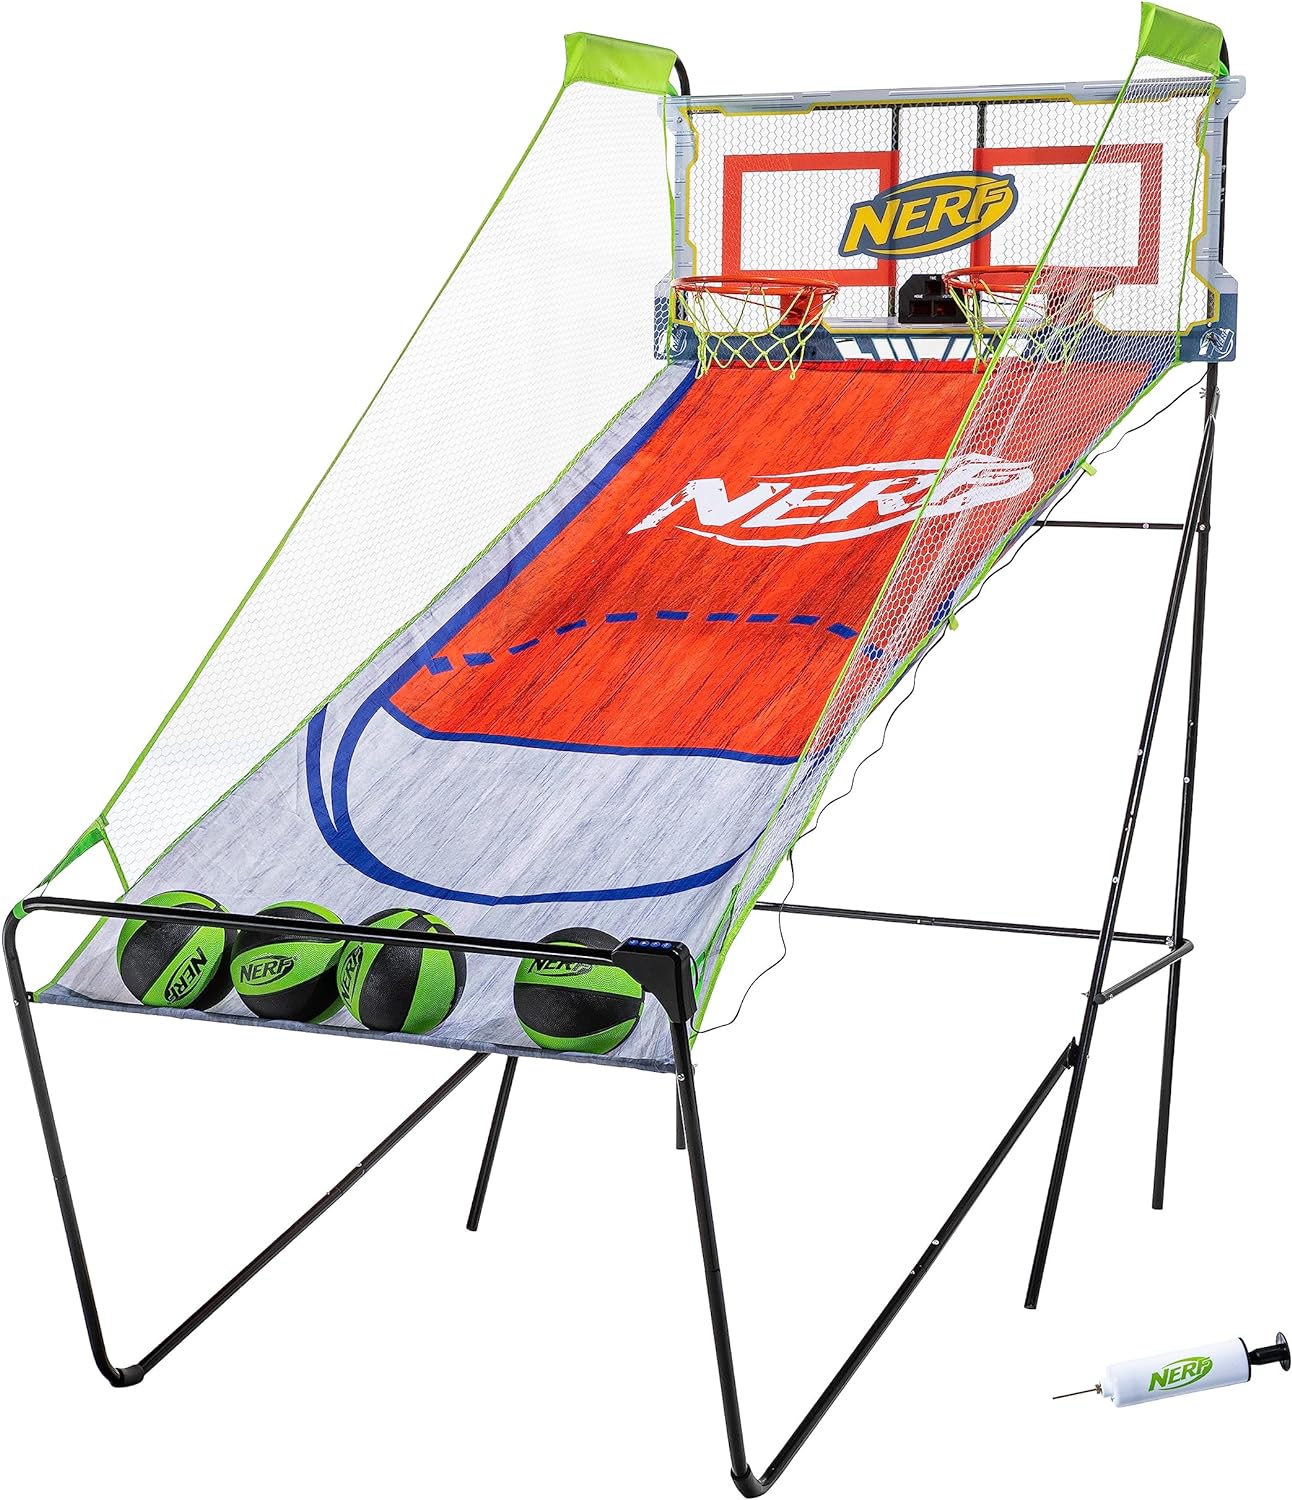 NERF Basketball Arcade Shootout - Proshot Indoor Electronic Double Basketball Hoop Game - Dual Court Basketball Shooting with Electronic Scoreboard + (4) Basketballs - 2 Player Shooting Game Multi